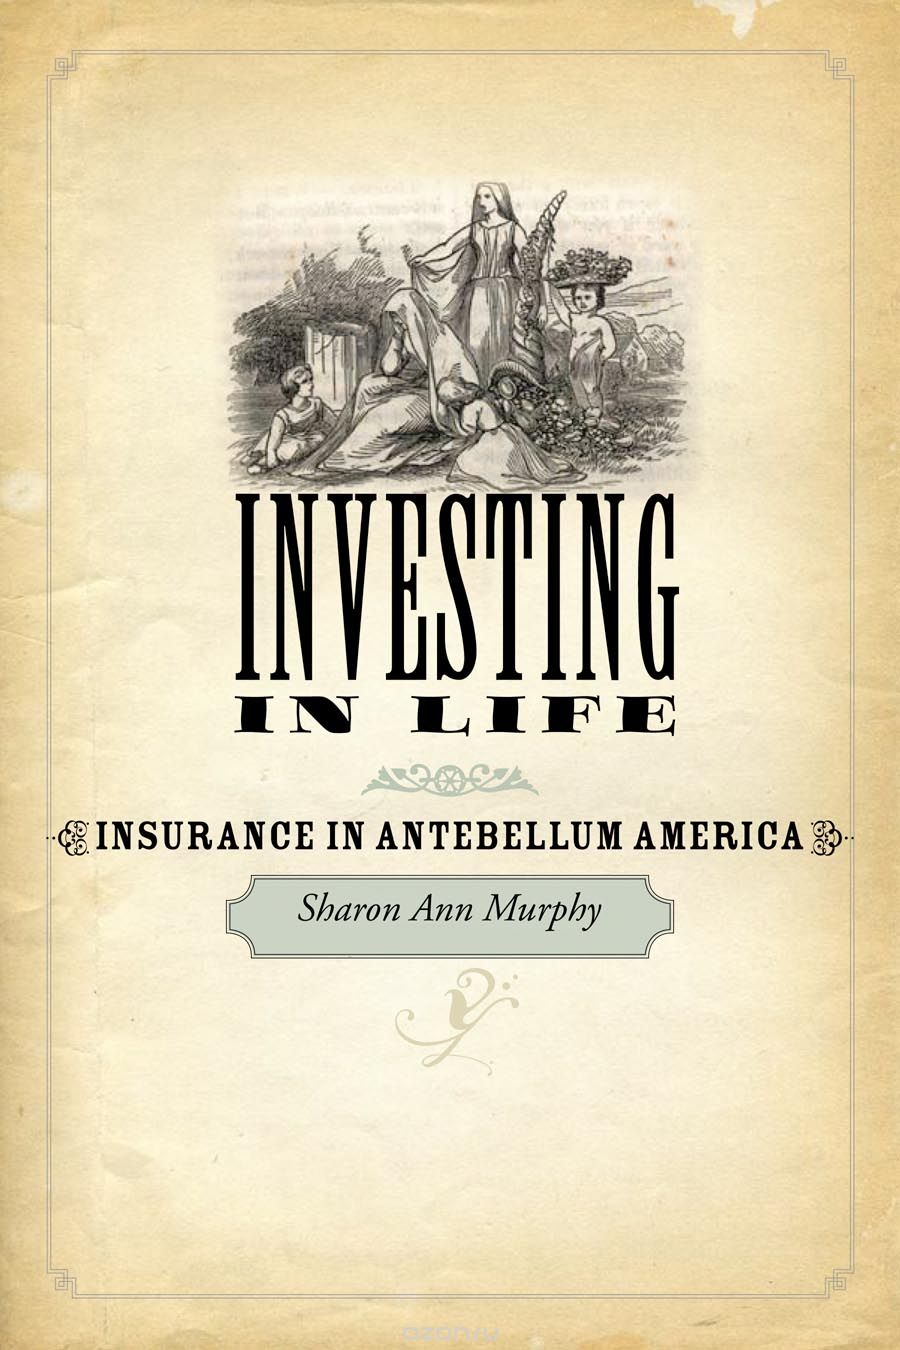 Скачать книгу "Investing in Life – Insurance in Antebellum America"